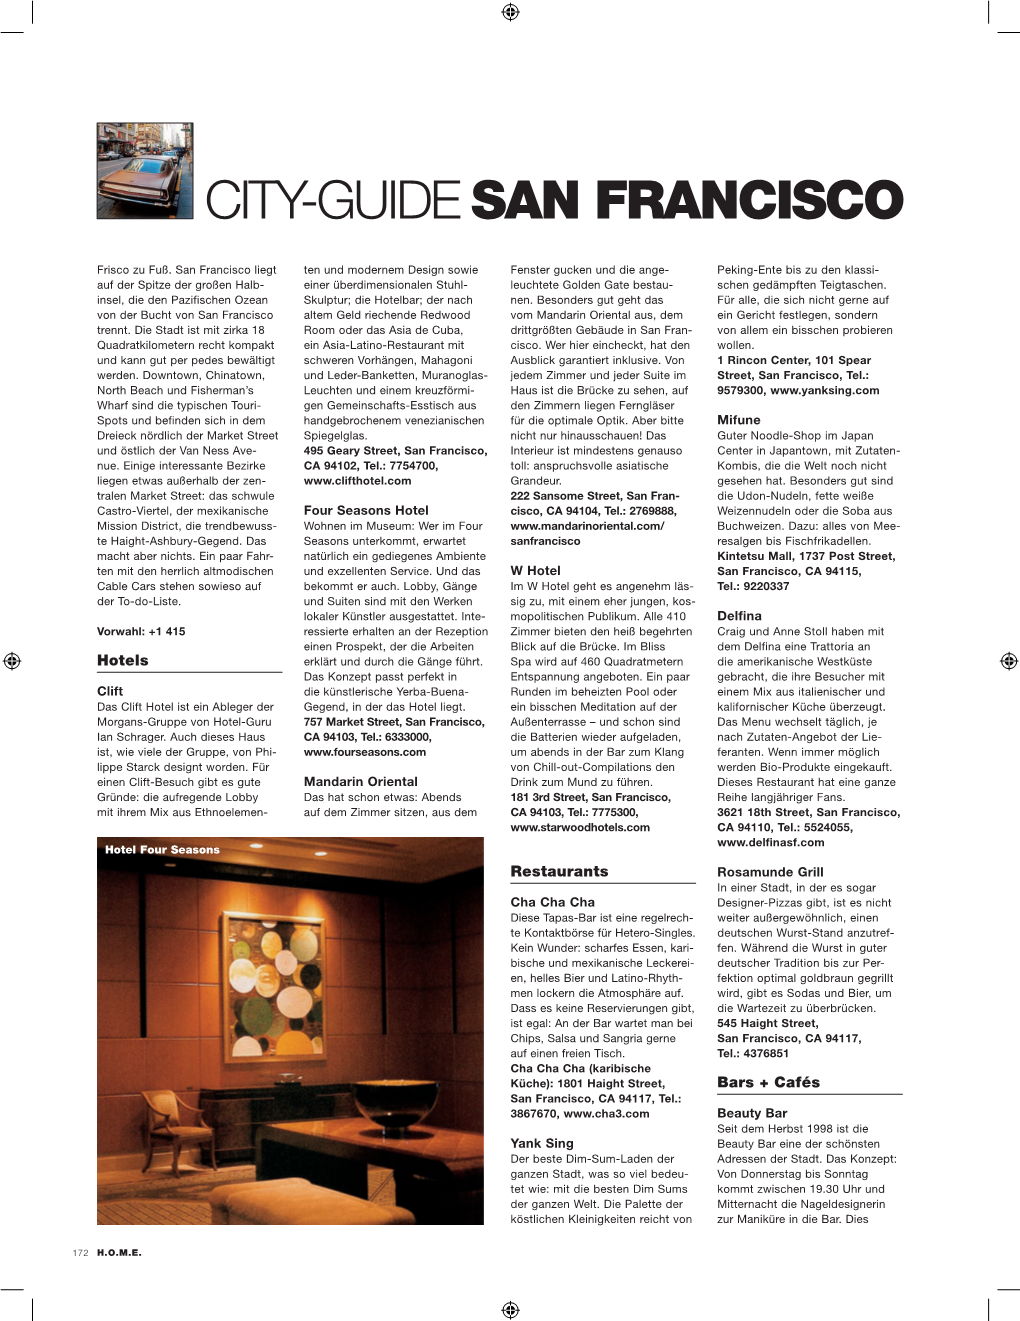 City-Guide San Francisco